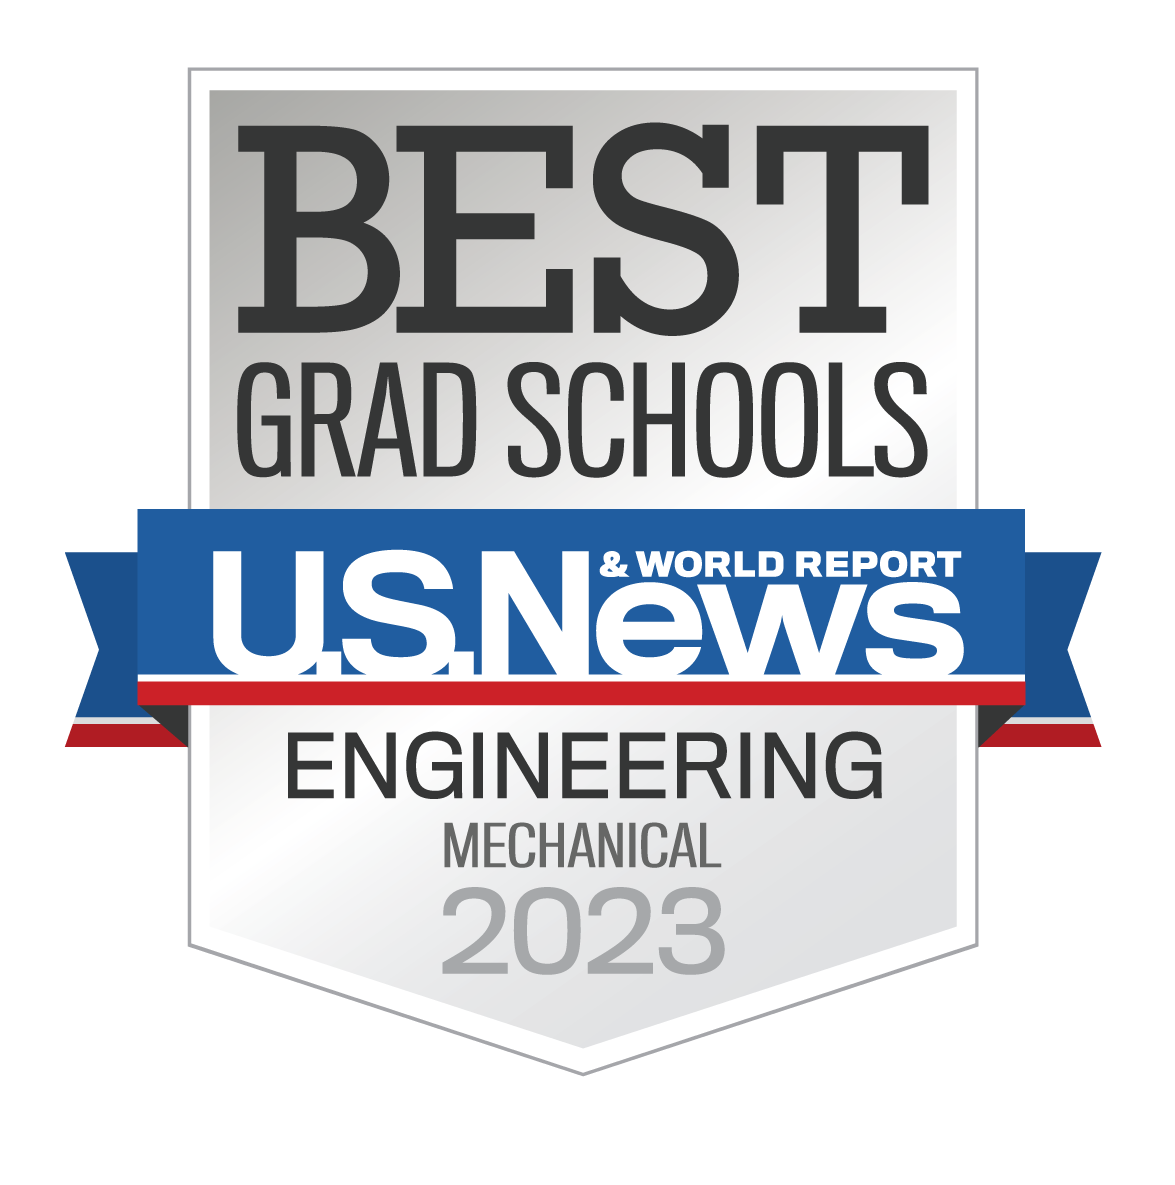 U.S. News & World Report badge for mechanical engineering